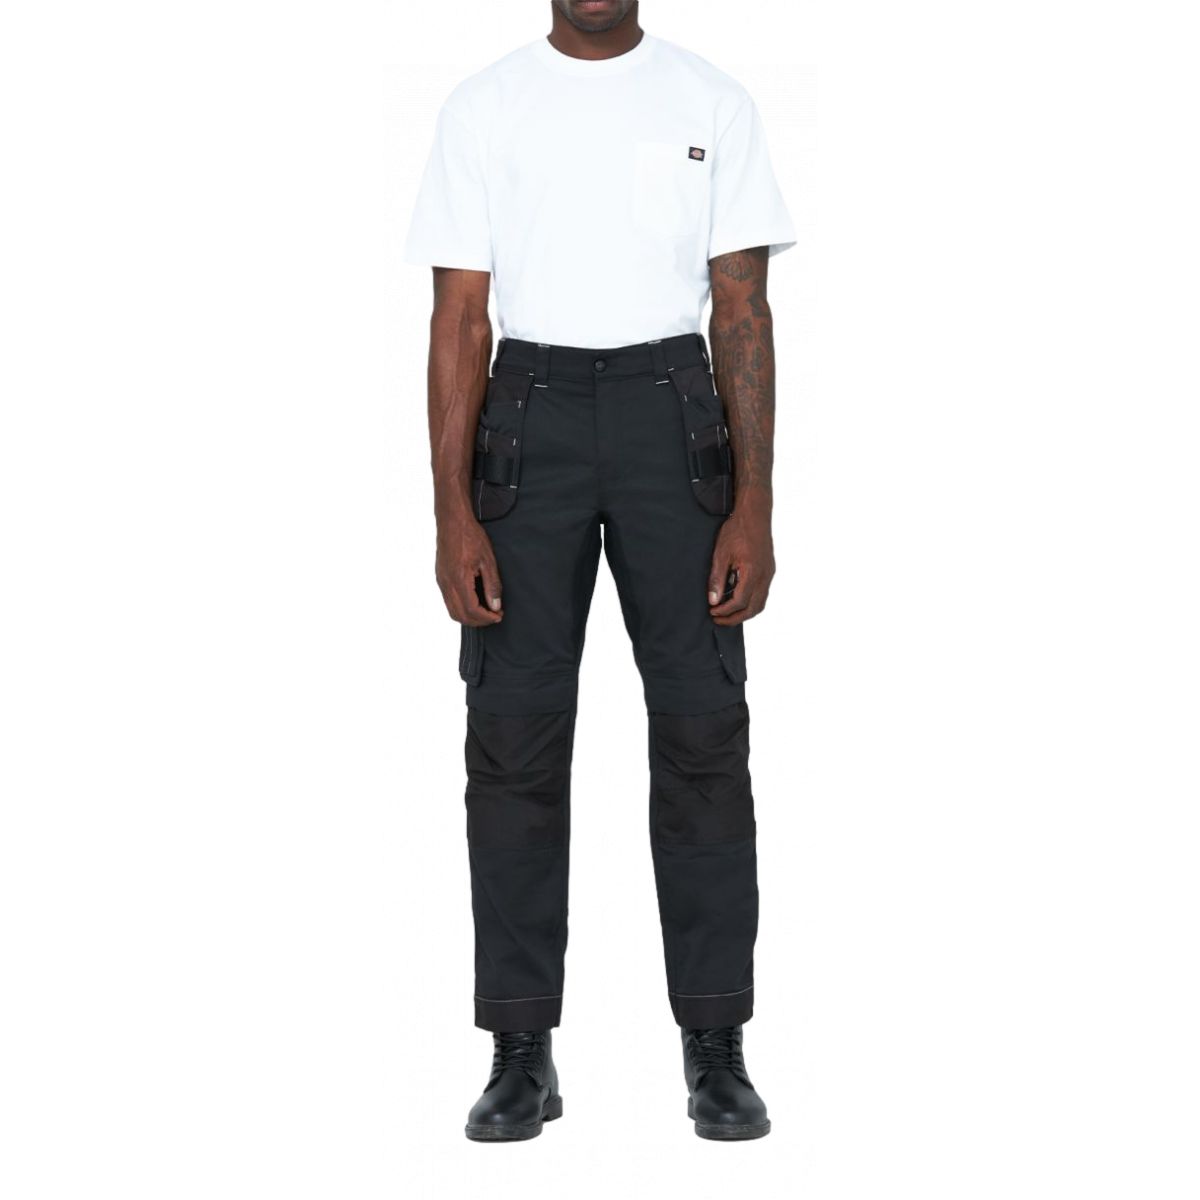 Pantalon Universal Flex Noir - Dickies - Taille 44 0